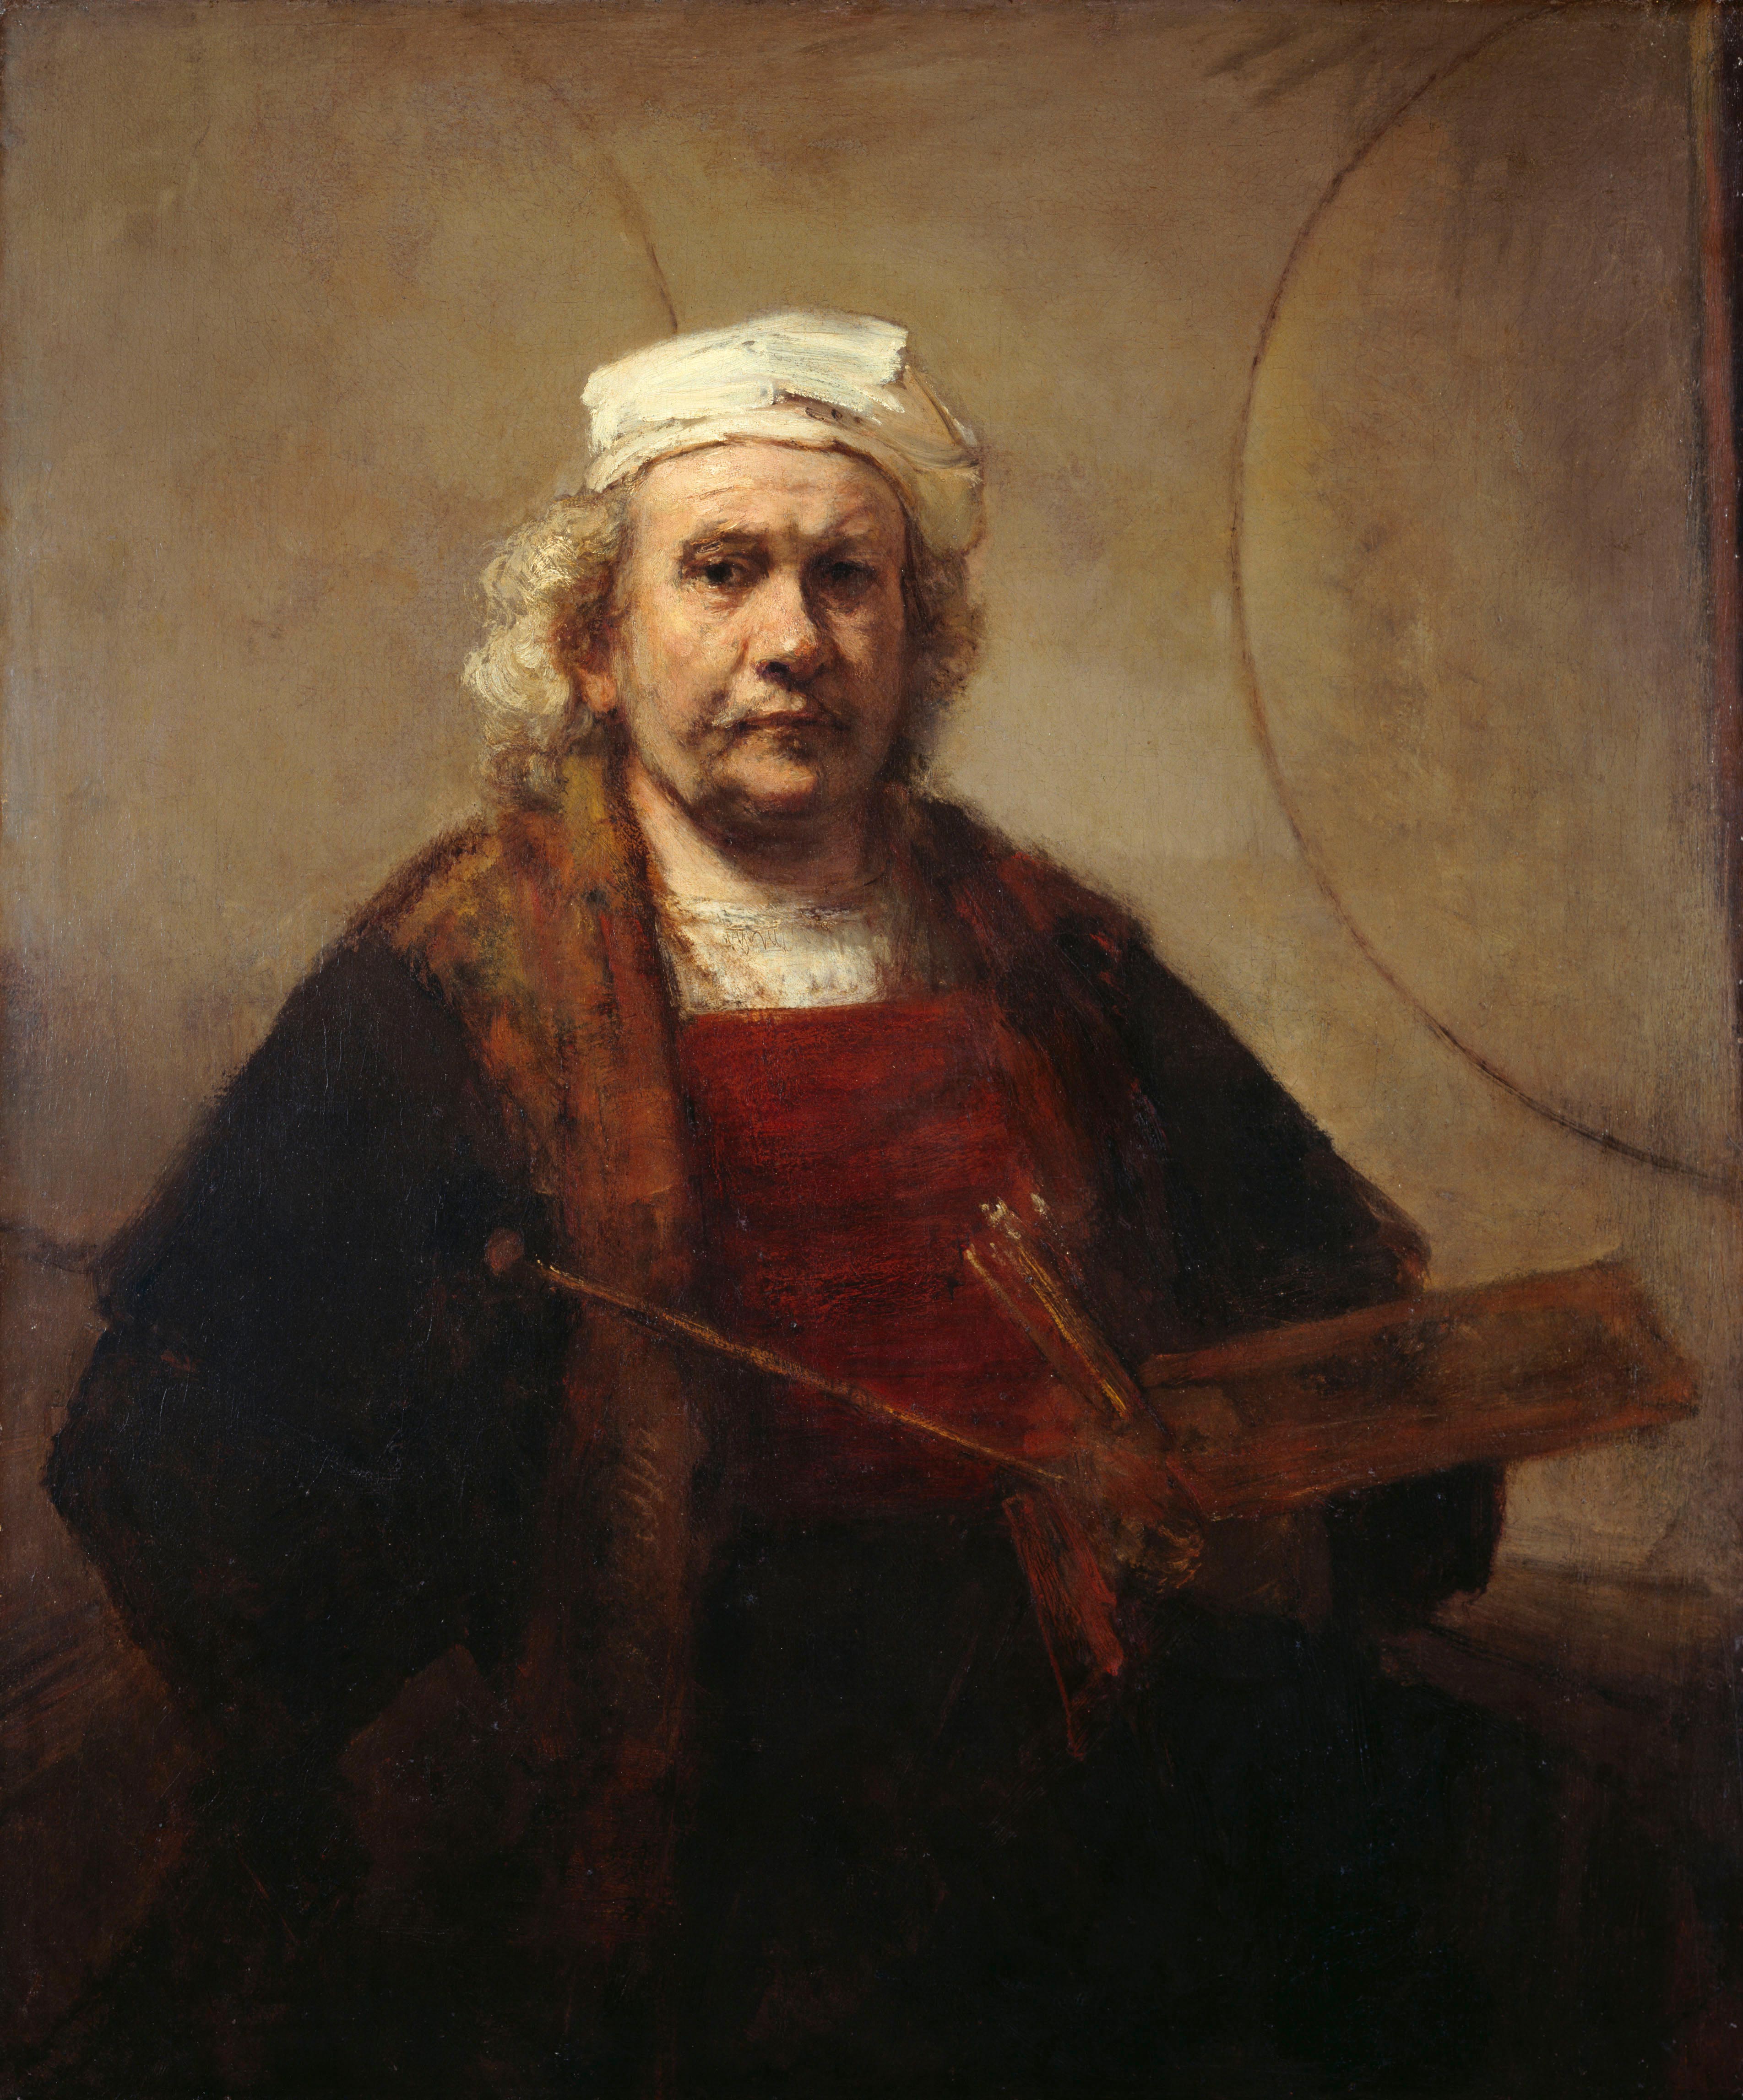 Rembrandt in Amsterdam